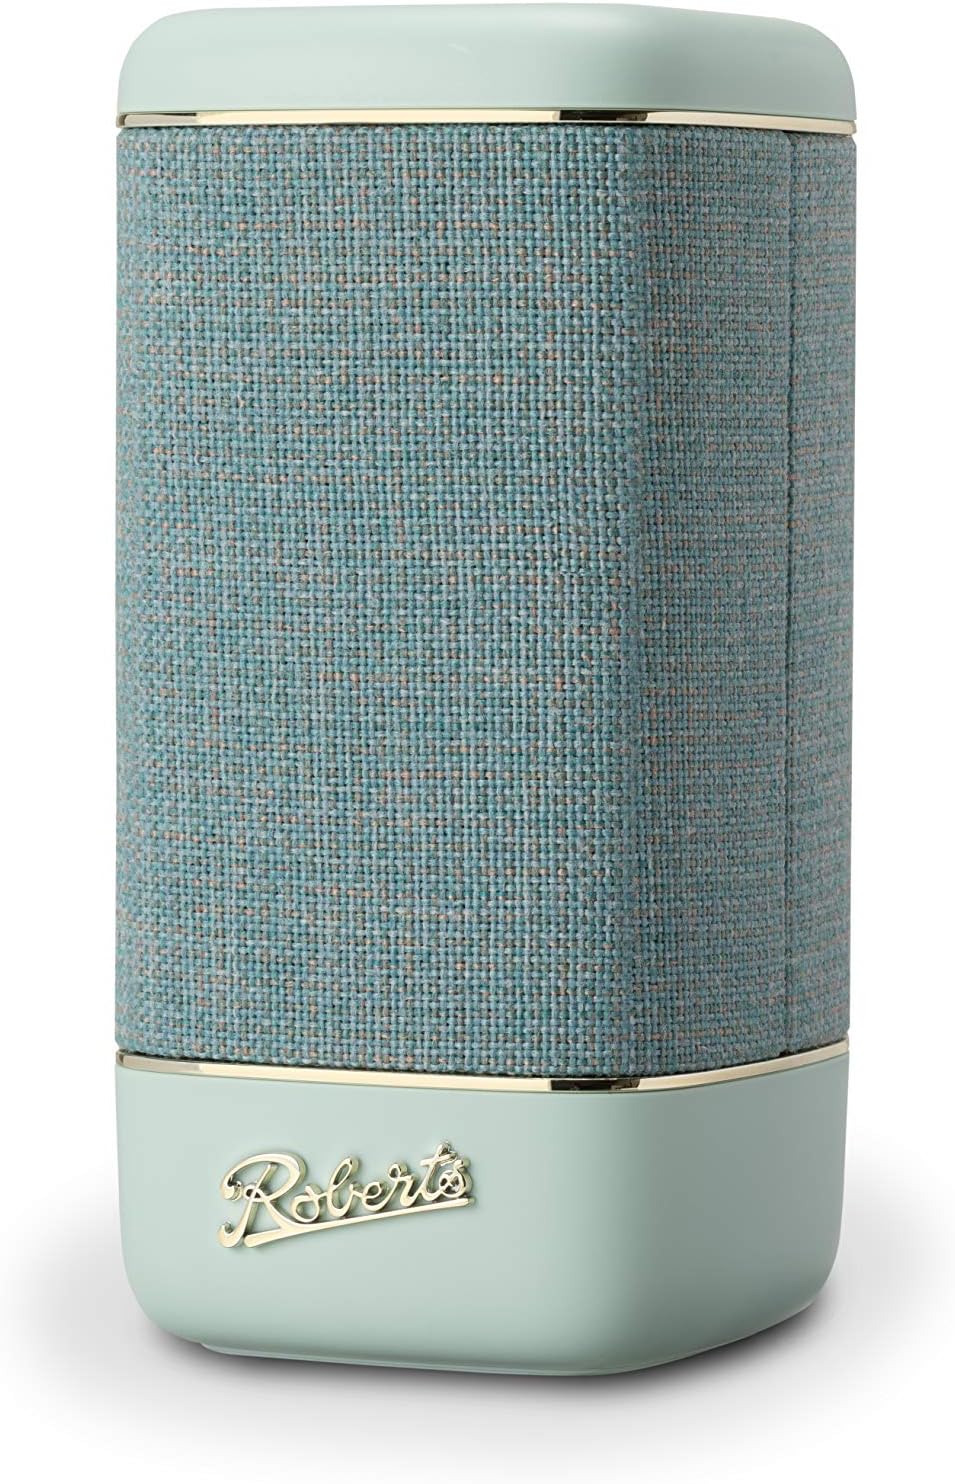 Roberts Beacon 330 Bluetooth Speaker - Duck Egg - Excellent